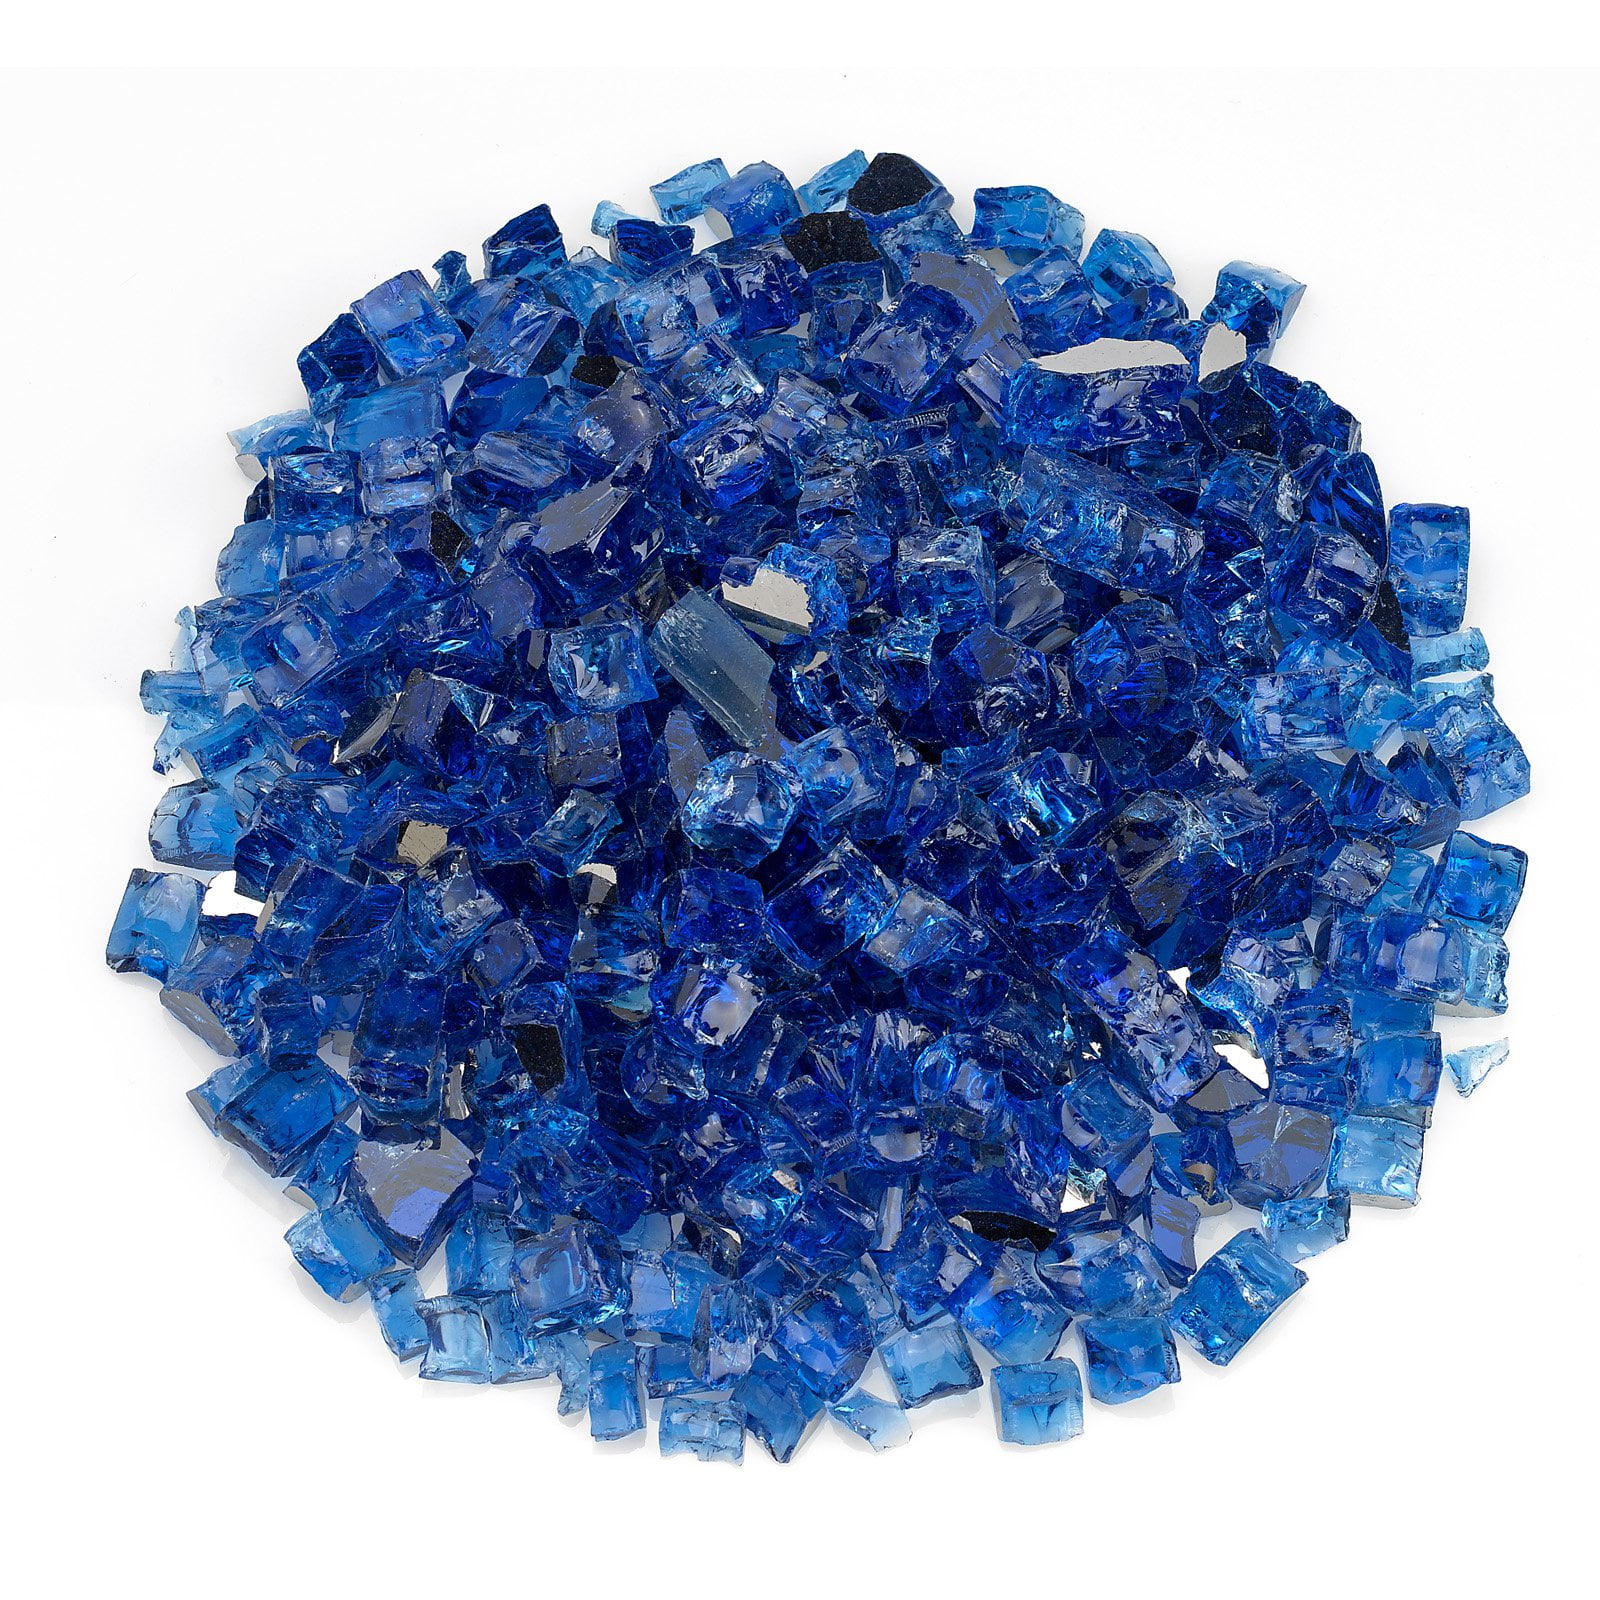 Aff-coblrf-10 0.25 In. Cobalt Blue Reflective Fire Glass - 10 Lbs